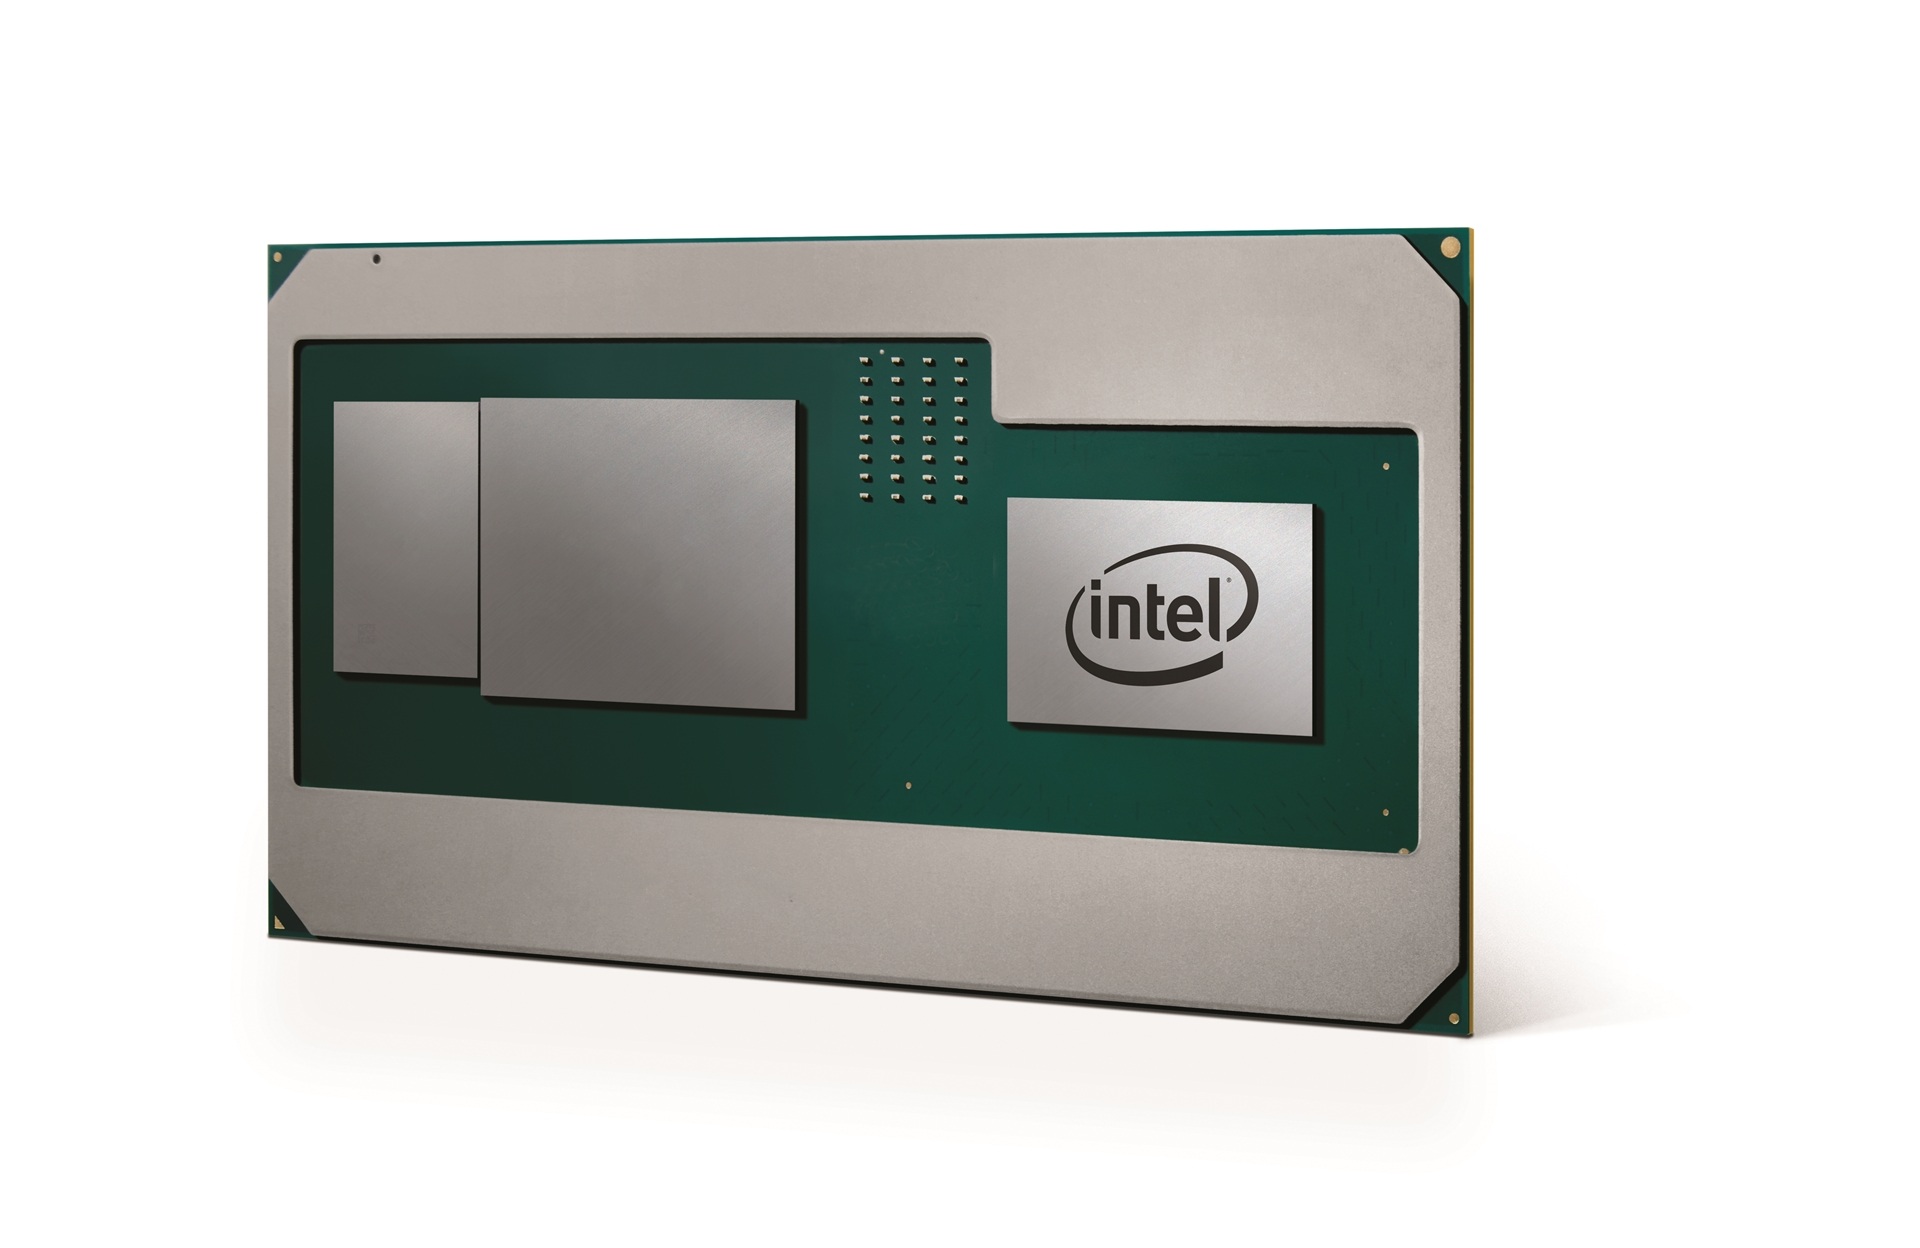 Intel's 8th Gen H-series